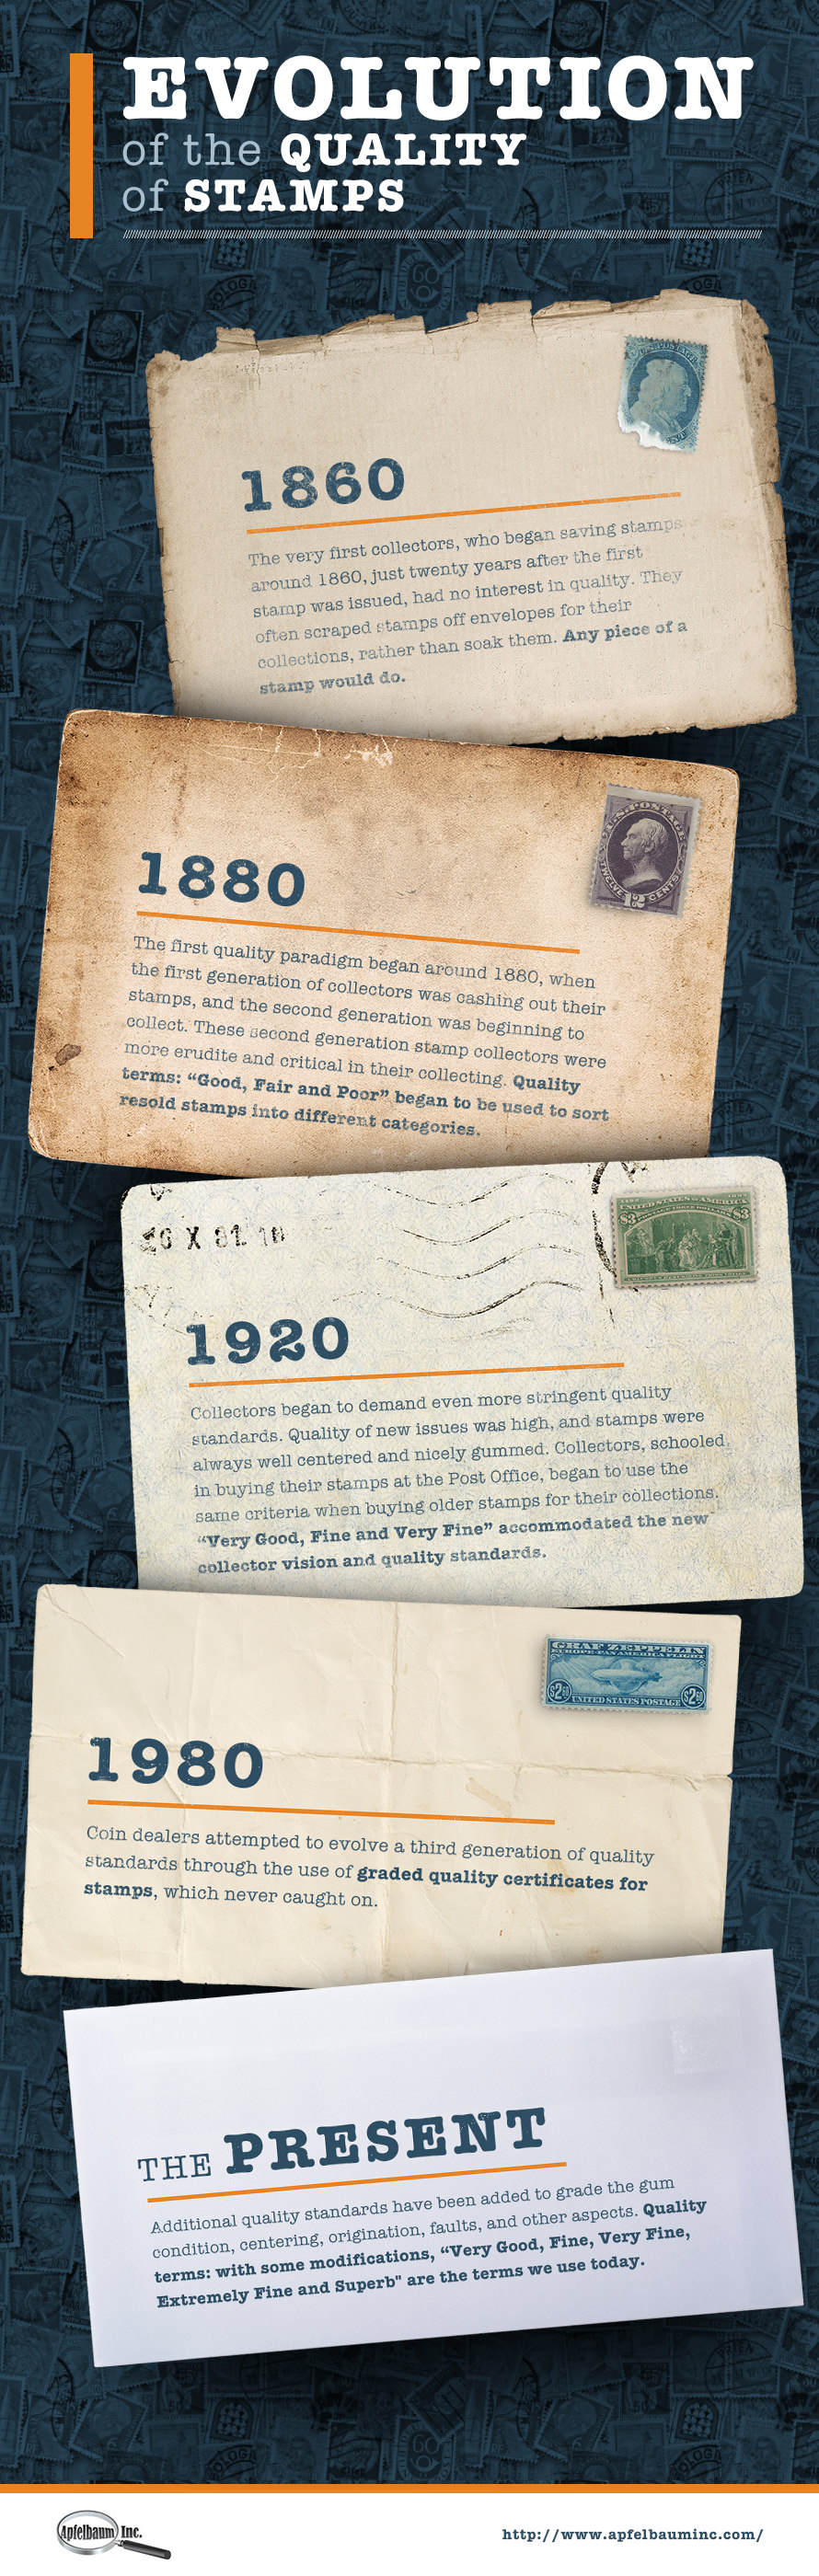 Evolution of Stamp Quality